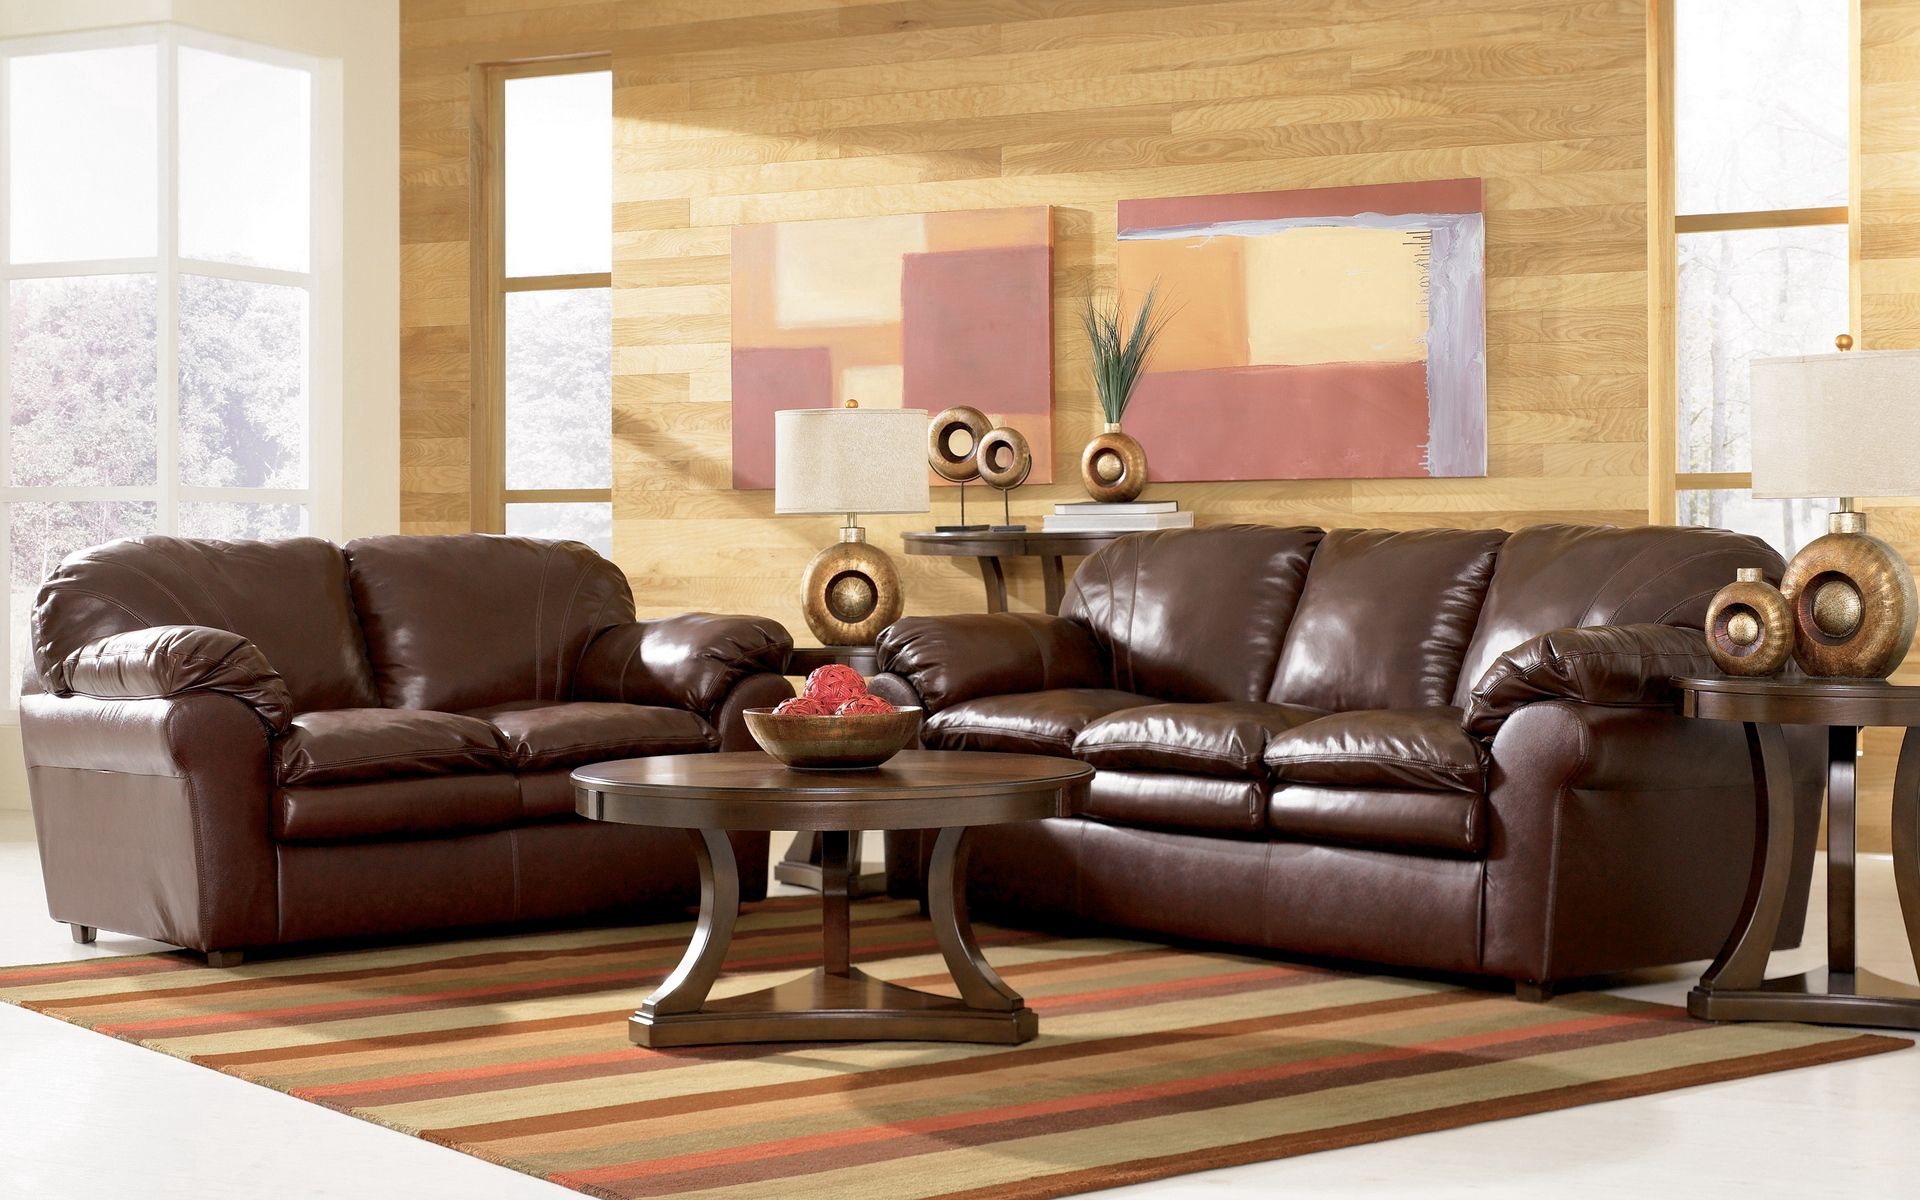 wallpapers leather, windows, walls, miscellanea, miscellaneous, room, sofa, armchair, furniture, skin